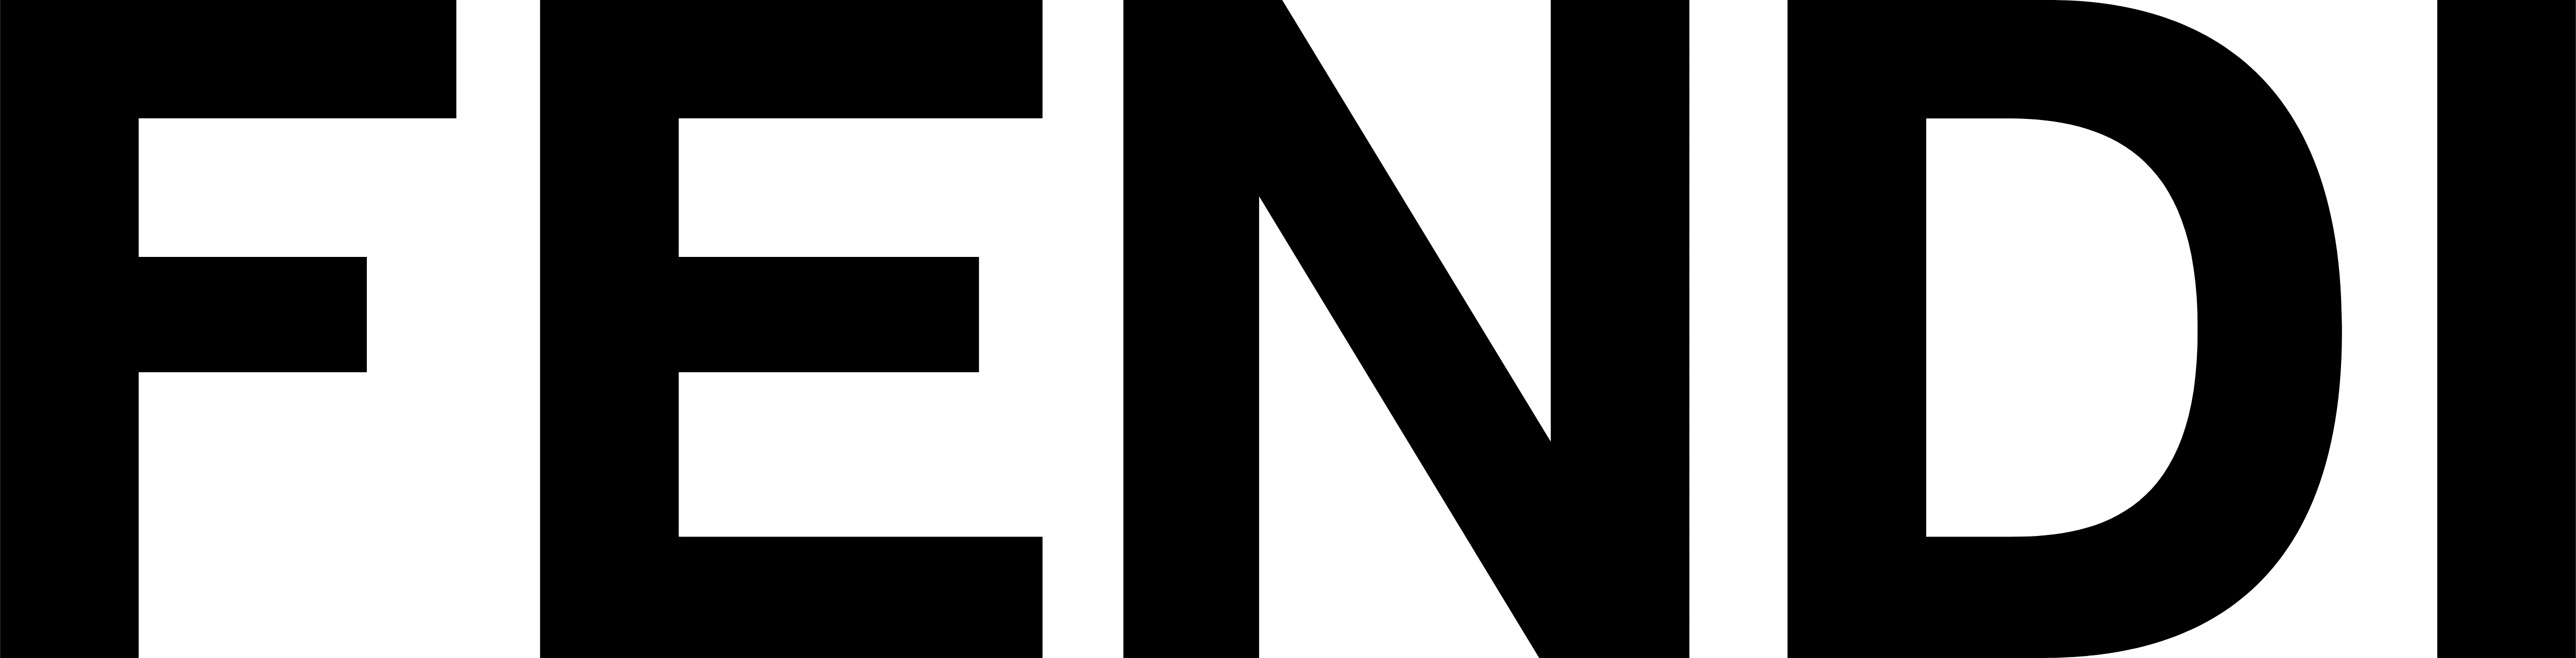 Fendi Logo transparent PNG - StickPNG